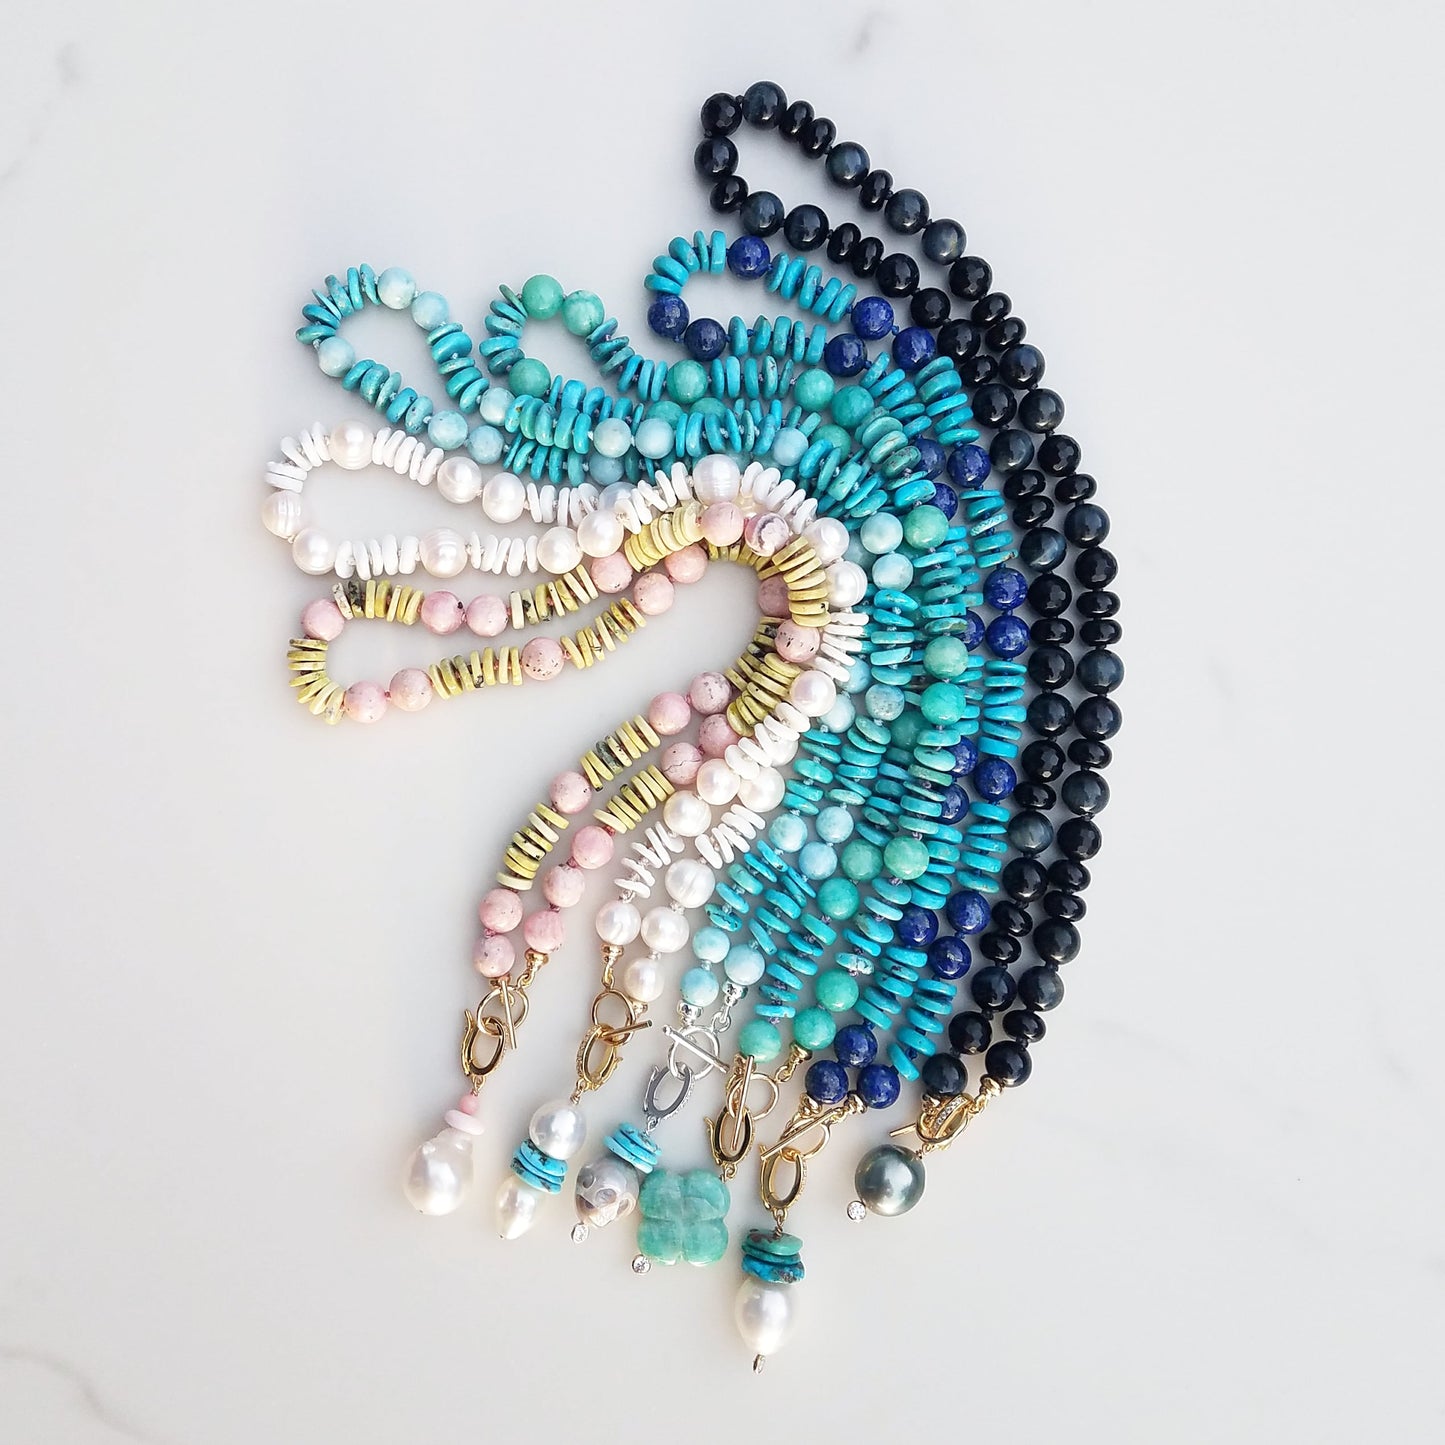 Lapis & Turquoise Helix Necklace